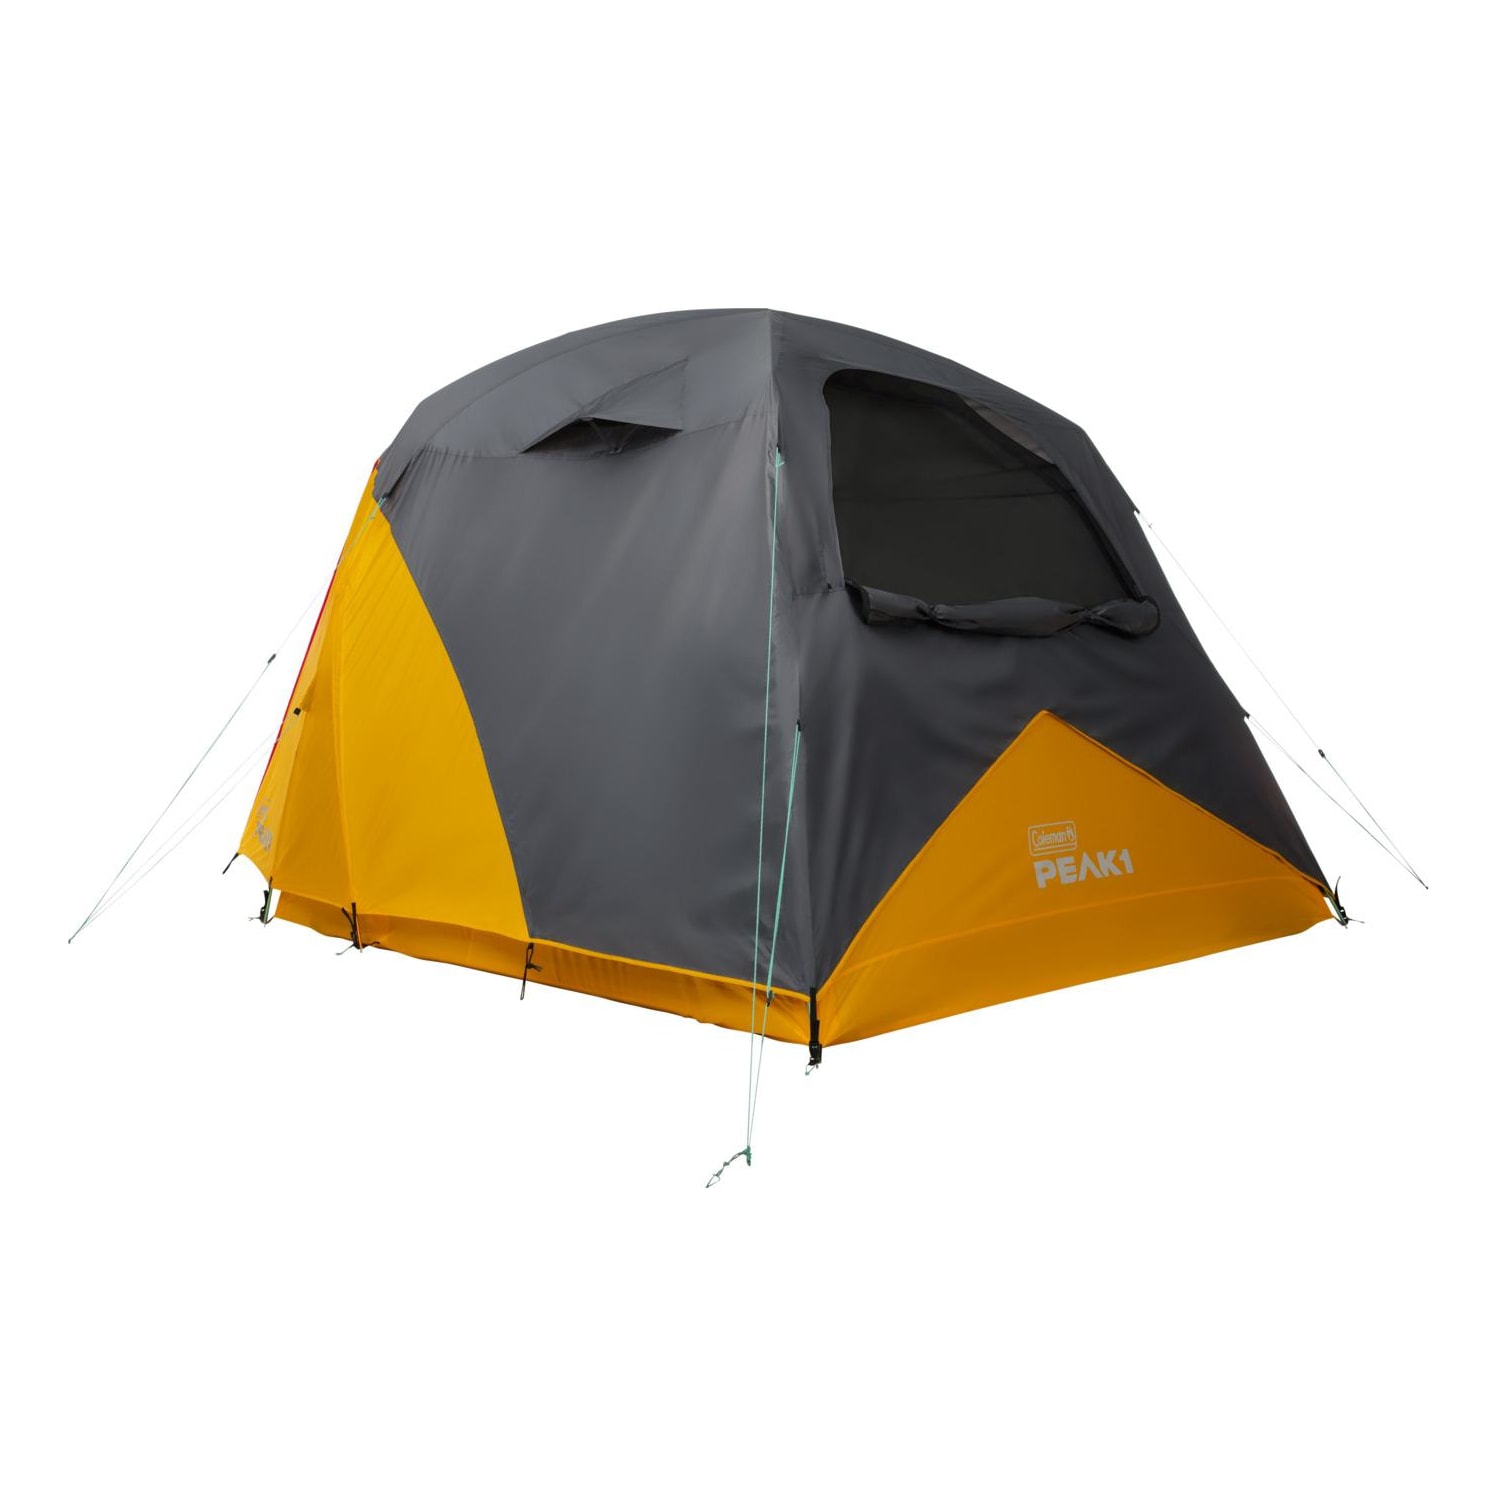 PEAK1™ 6-Person Dome Tent | Cabela's Canada